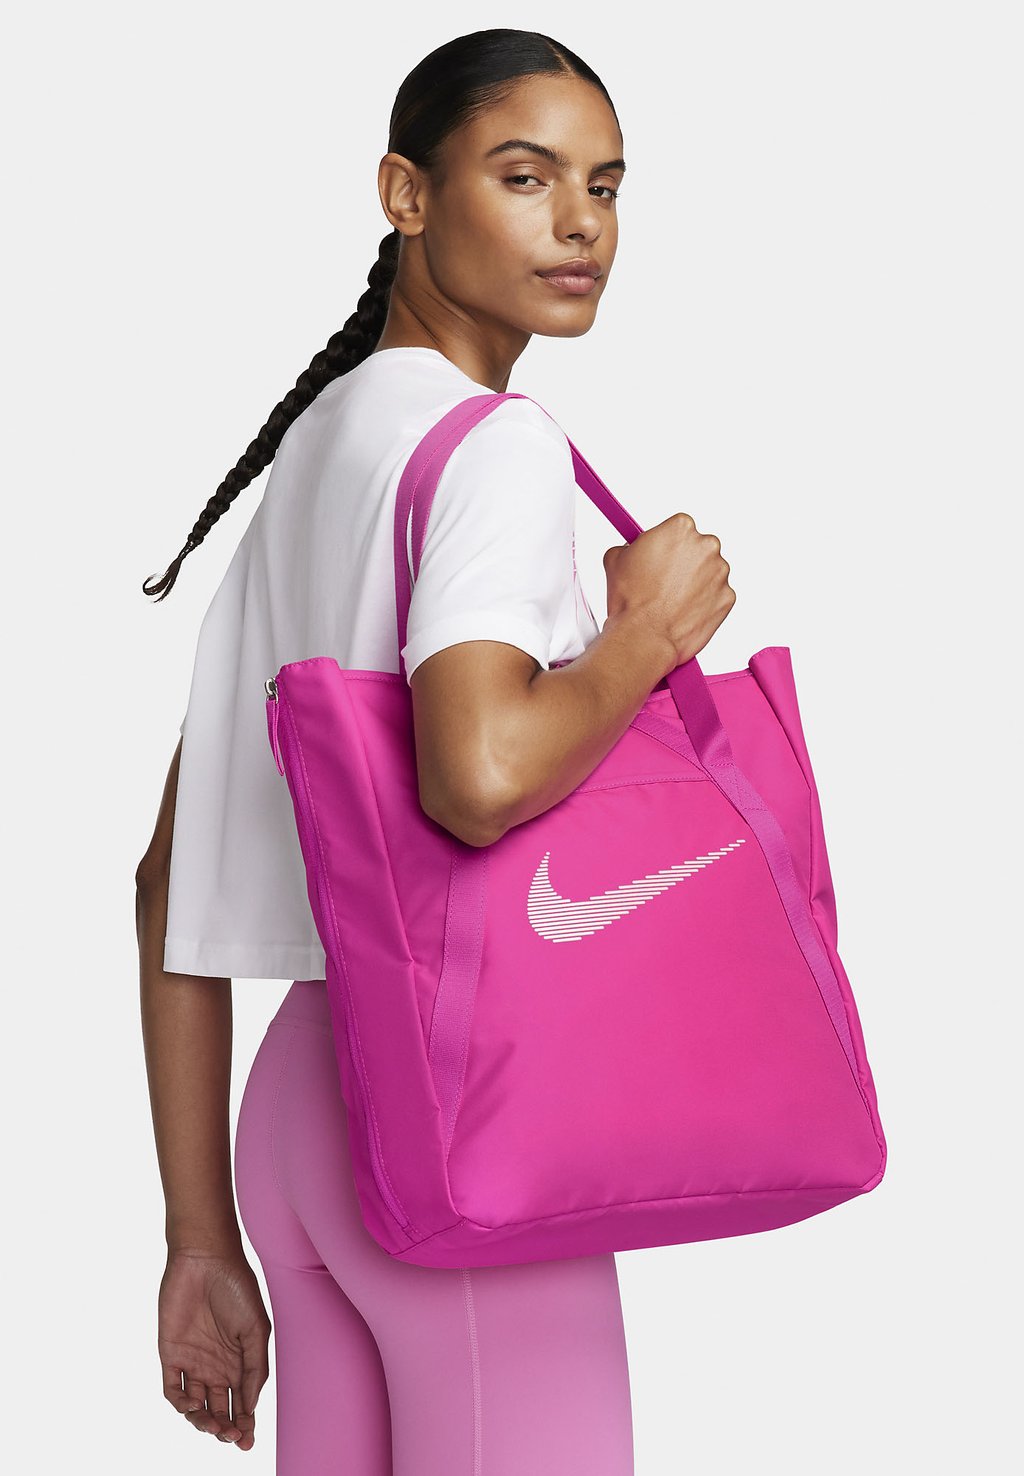 Спортивная сумка Nike, лазерная фуксия/лазерная фуксия/(средне-мягко-розовый) laser dazzling pink sheet rainbow brocade powder laser chameleon dazzling pink magic mirror effect powder